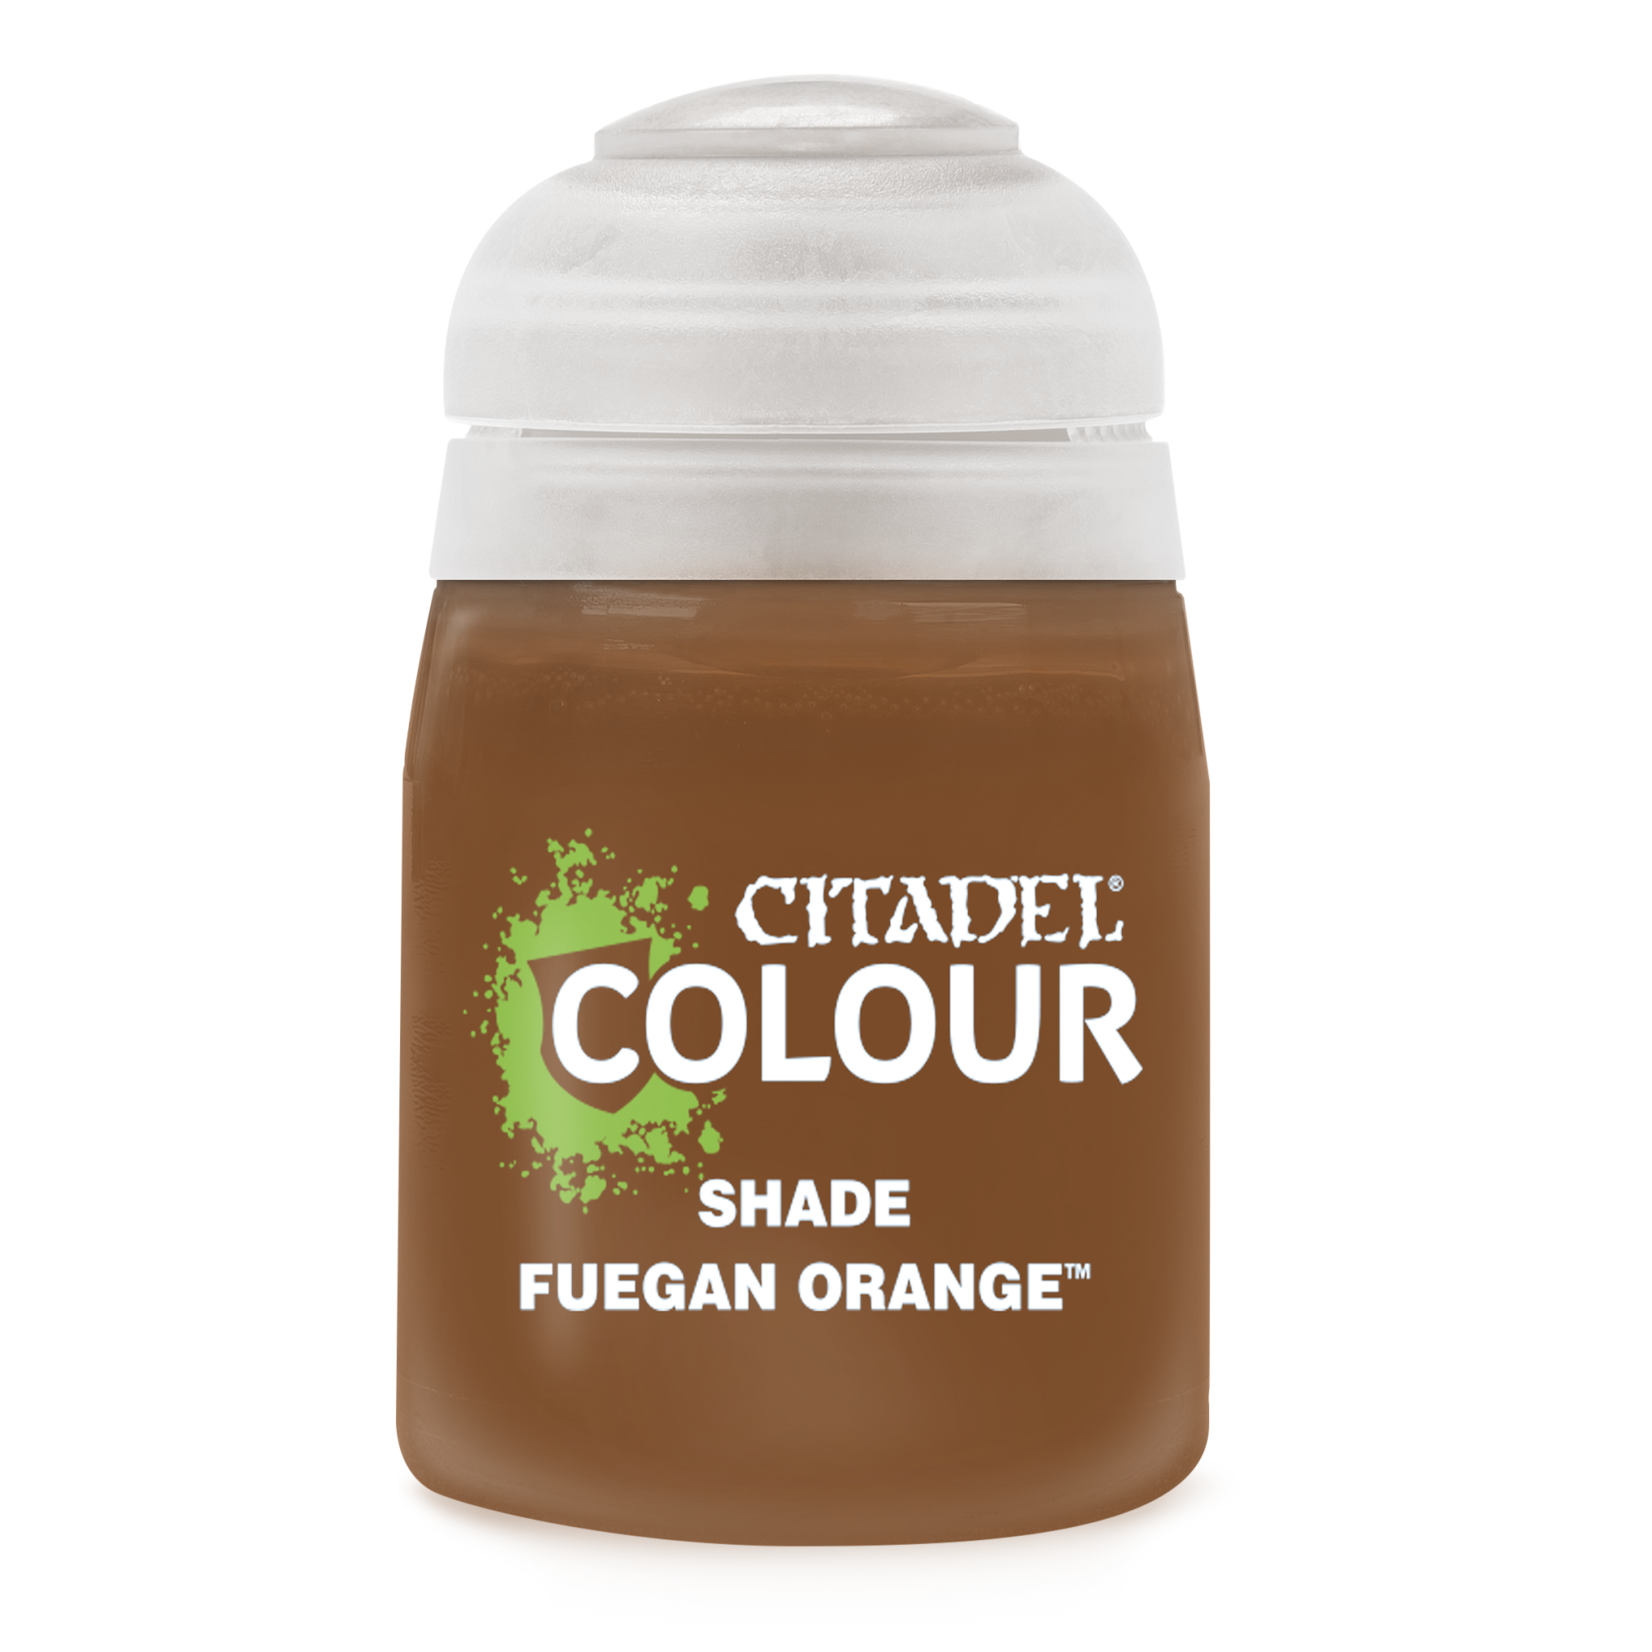 Citadel Shade Fuegan Orange 18ml Reformulated